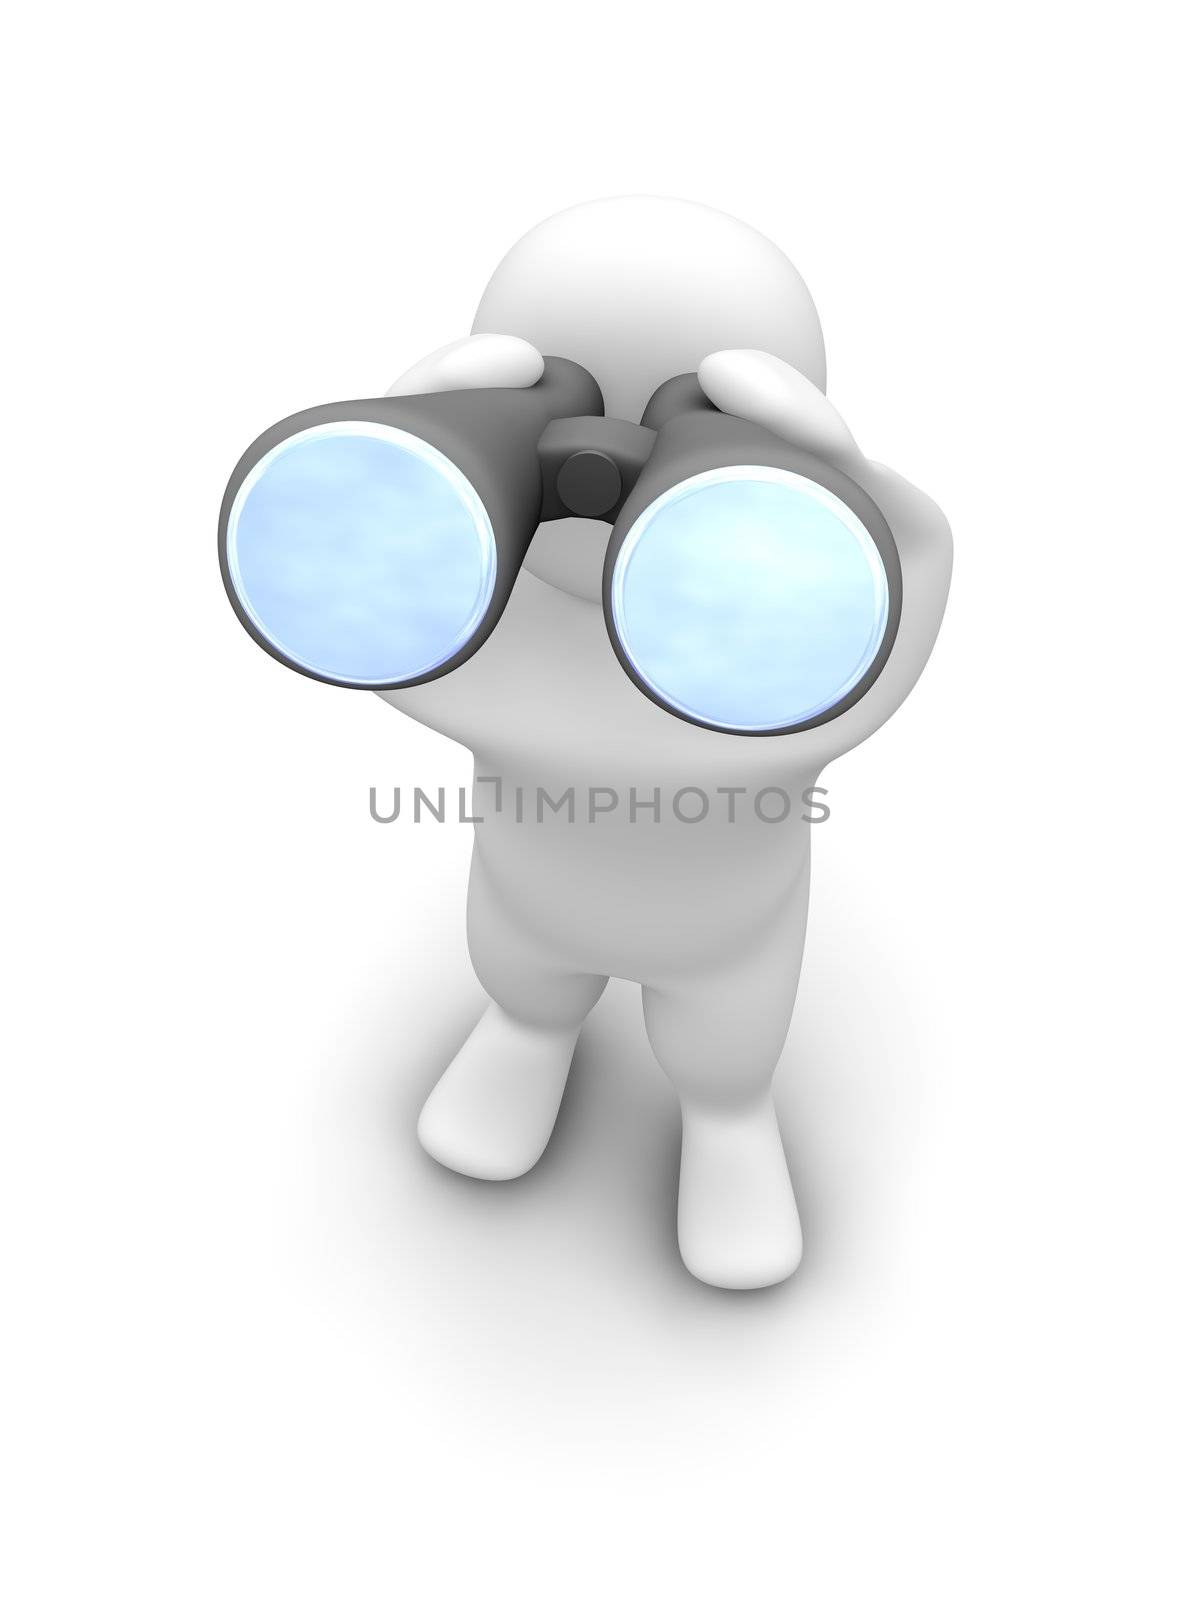 Man looking through binoculars. 3d rendered illustration.